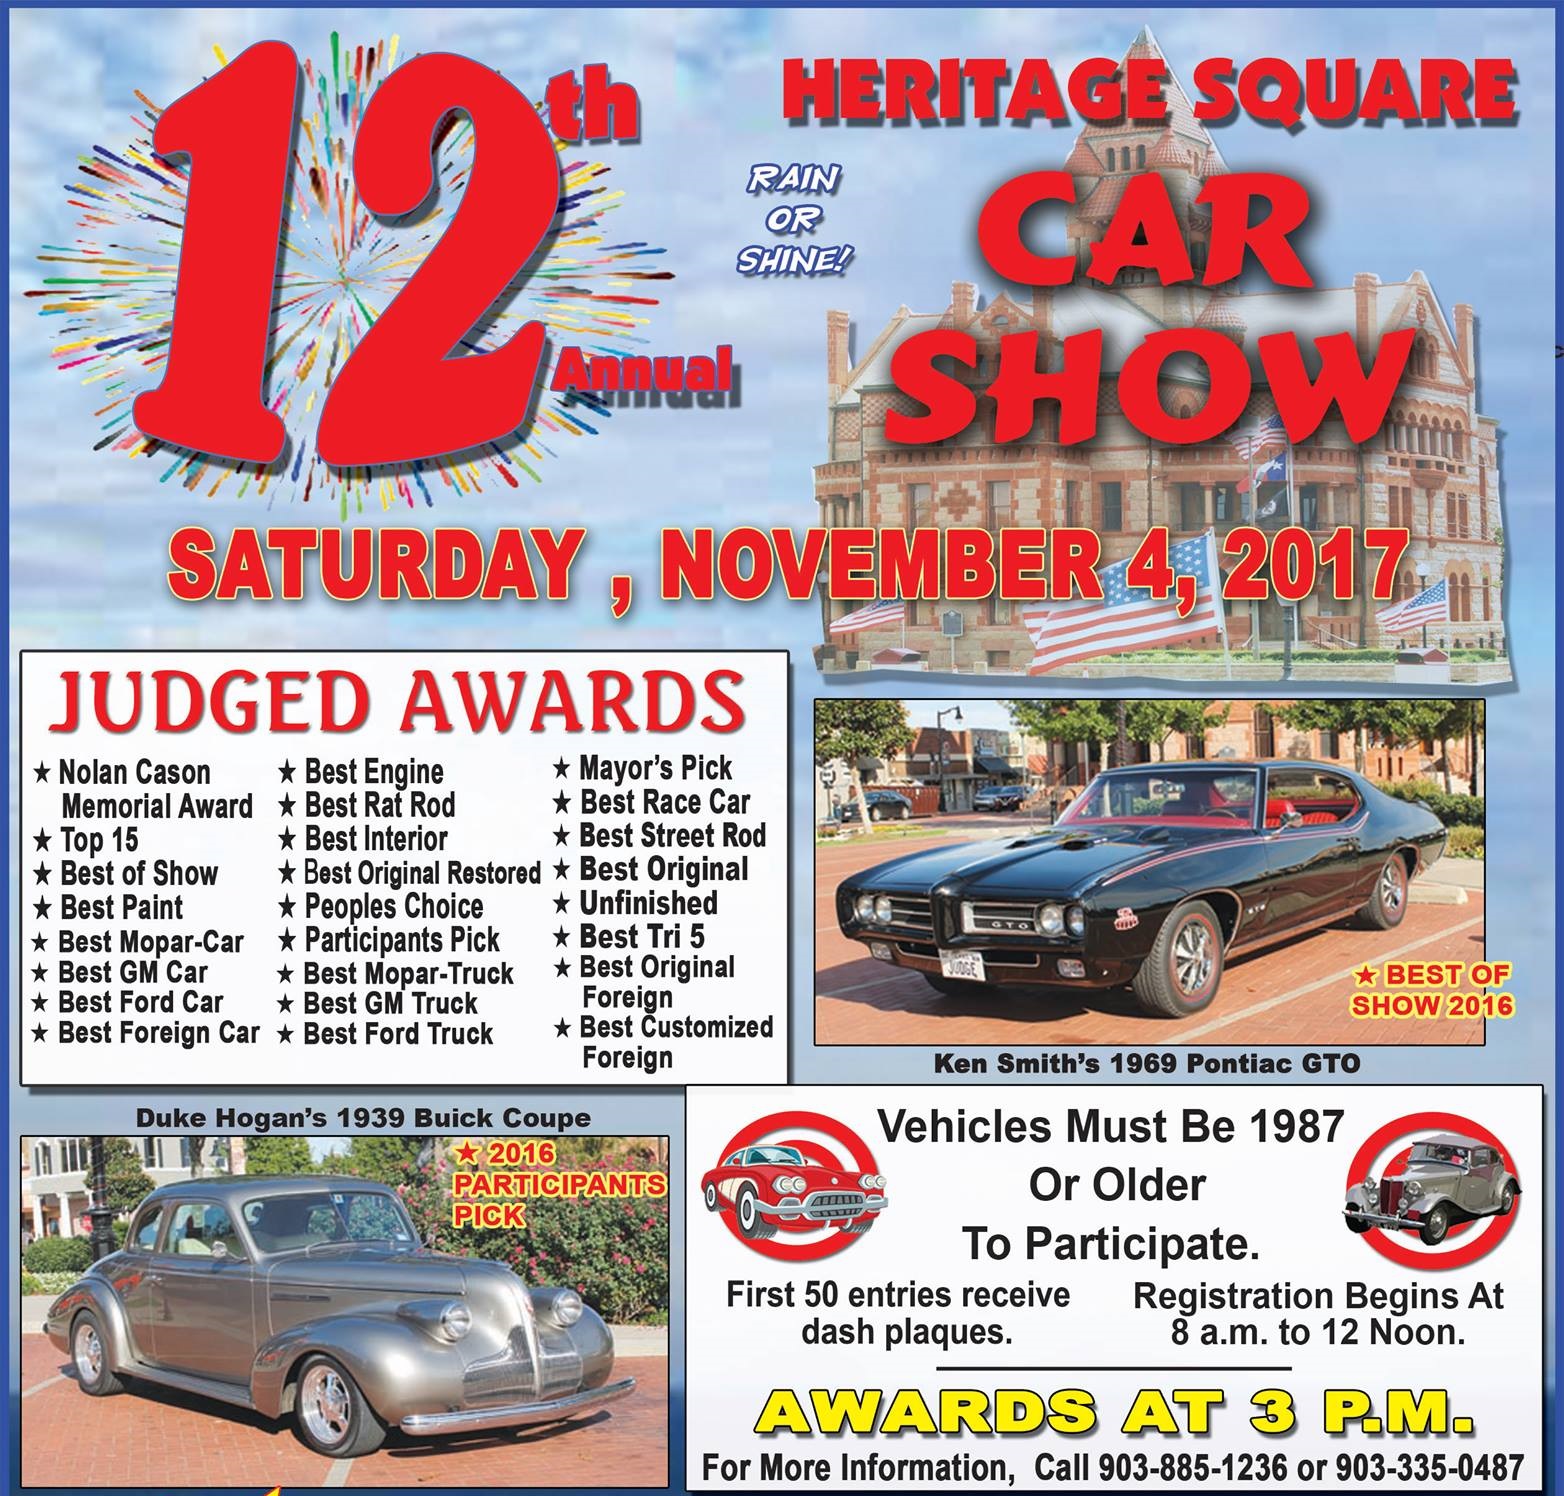 12th Annual Heritage Square Car Show on Saturday November 4th